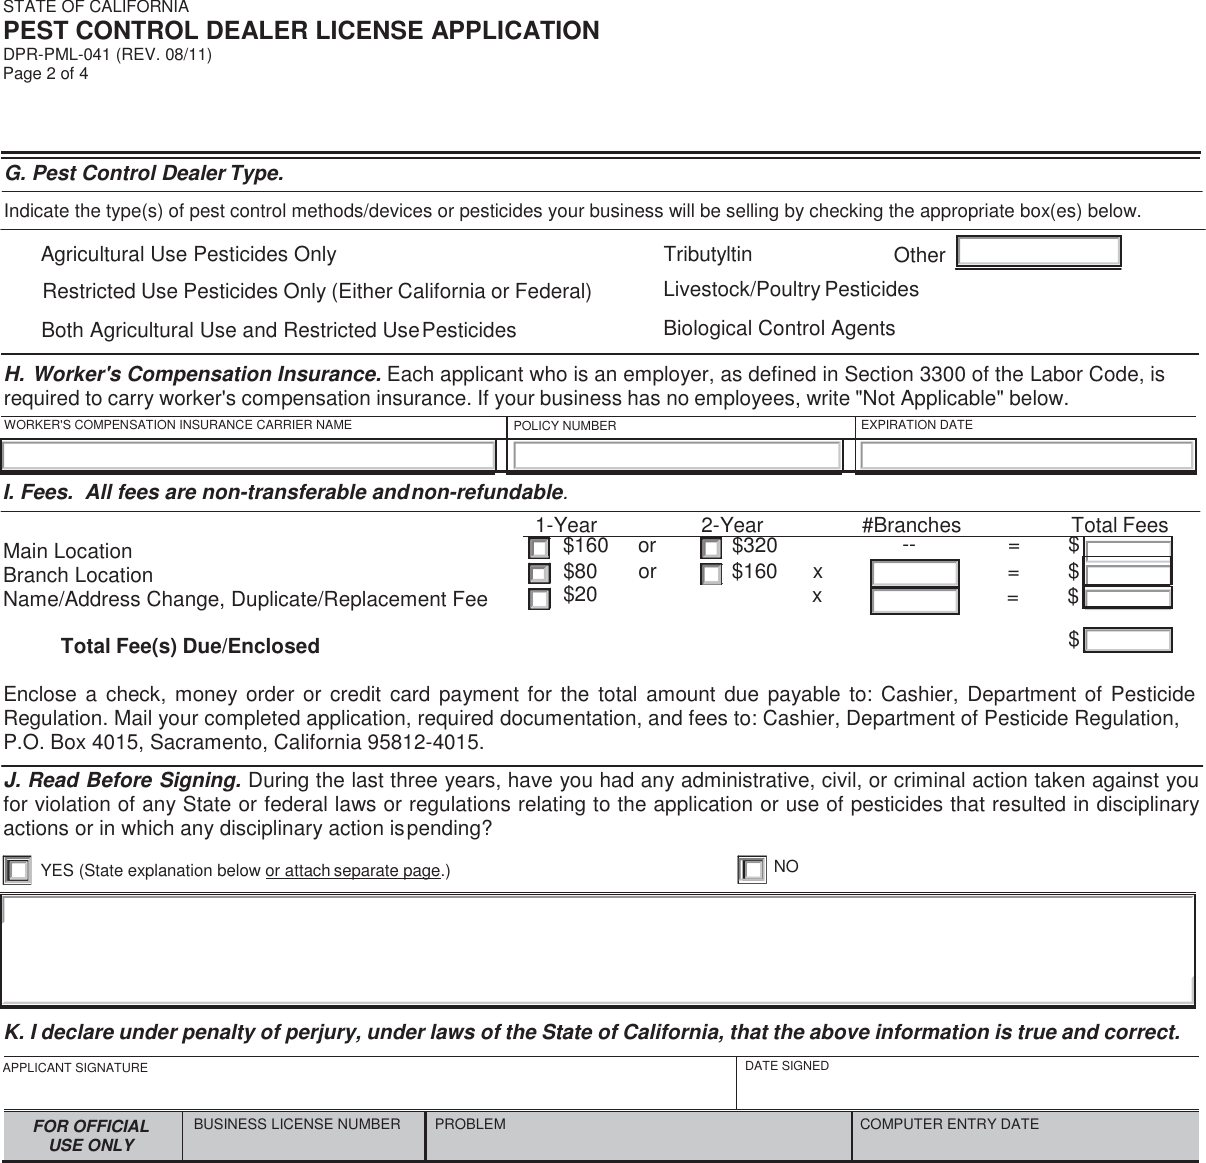 Page 8 of 11 - Pest Control Dealer License Application, DPR-PML-041  20180612 145141 PCDBL Packet